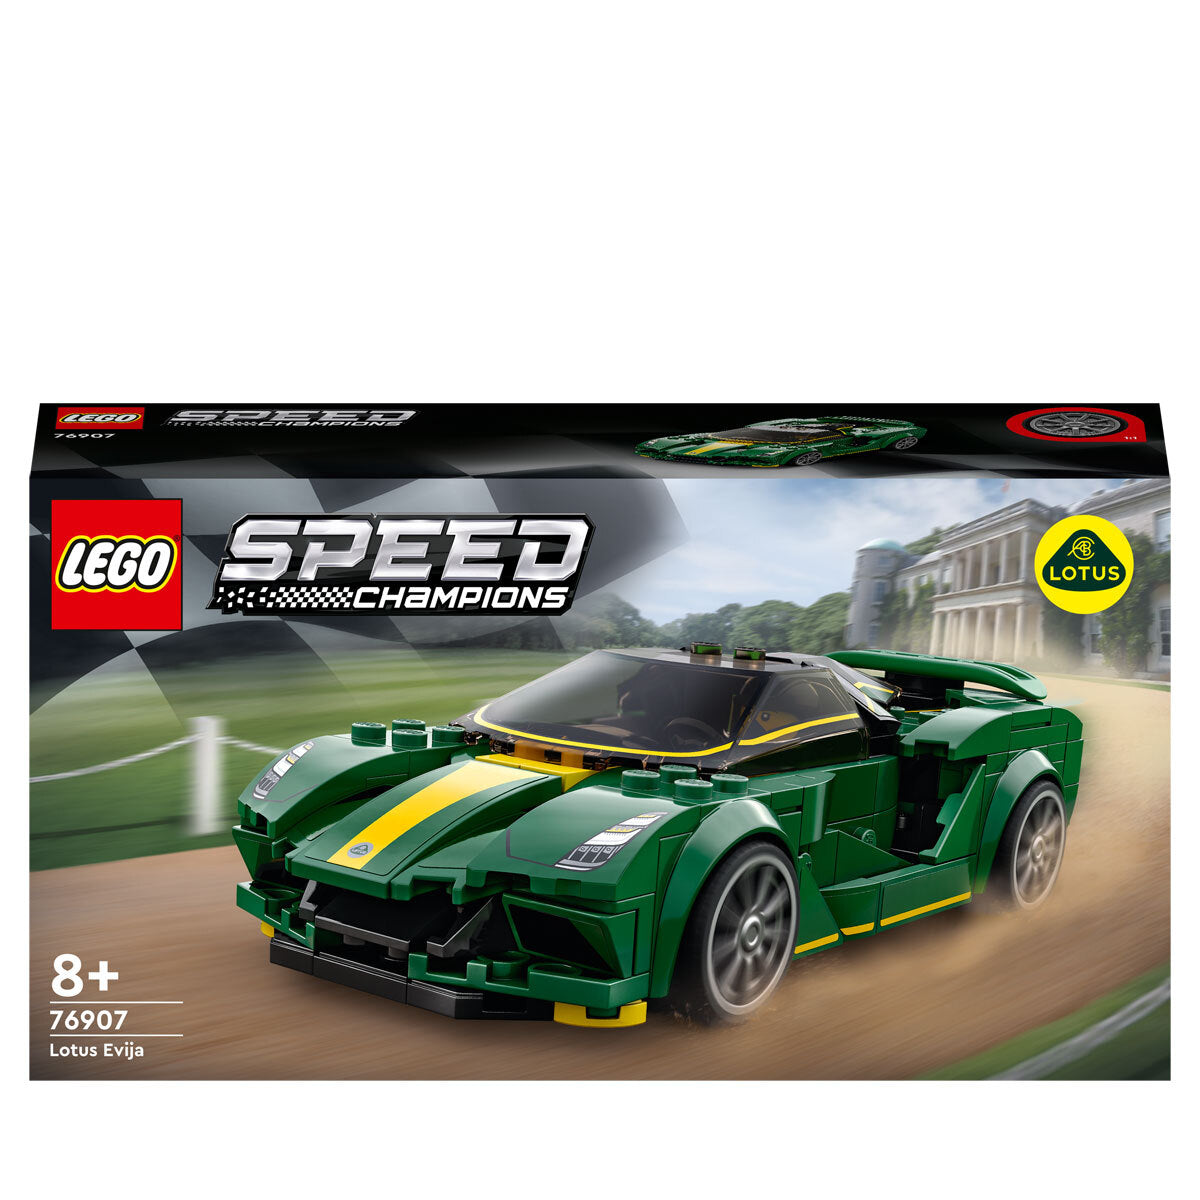 LEGO Speed Campions - Lotus Evija 76907